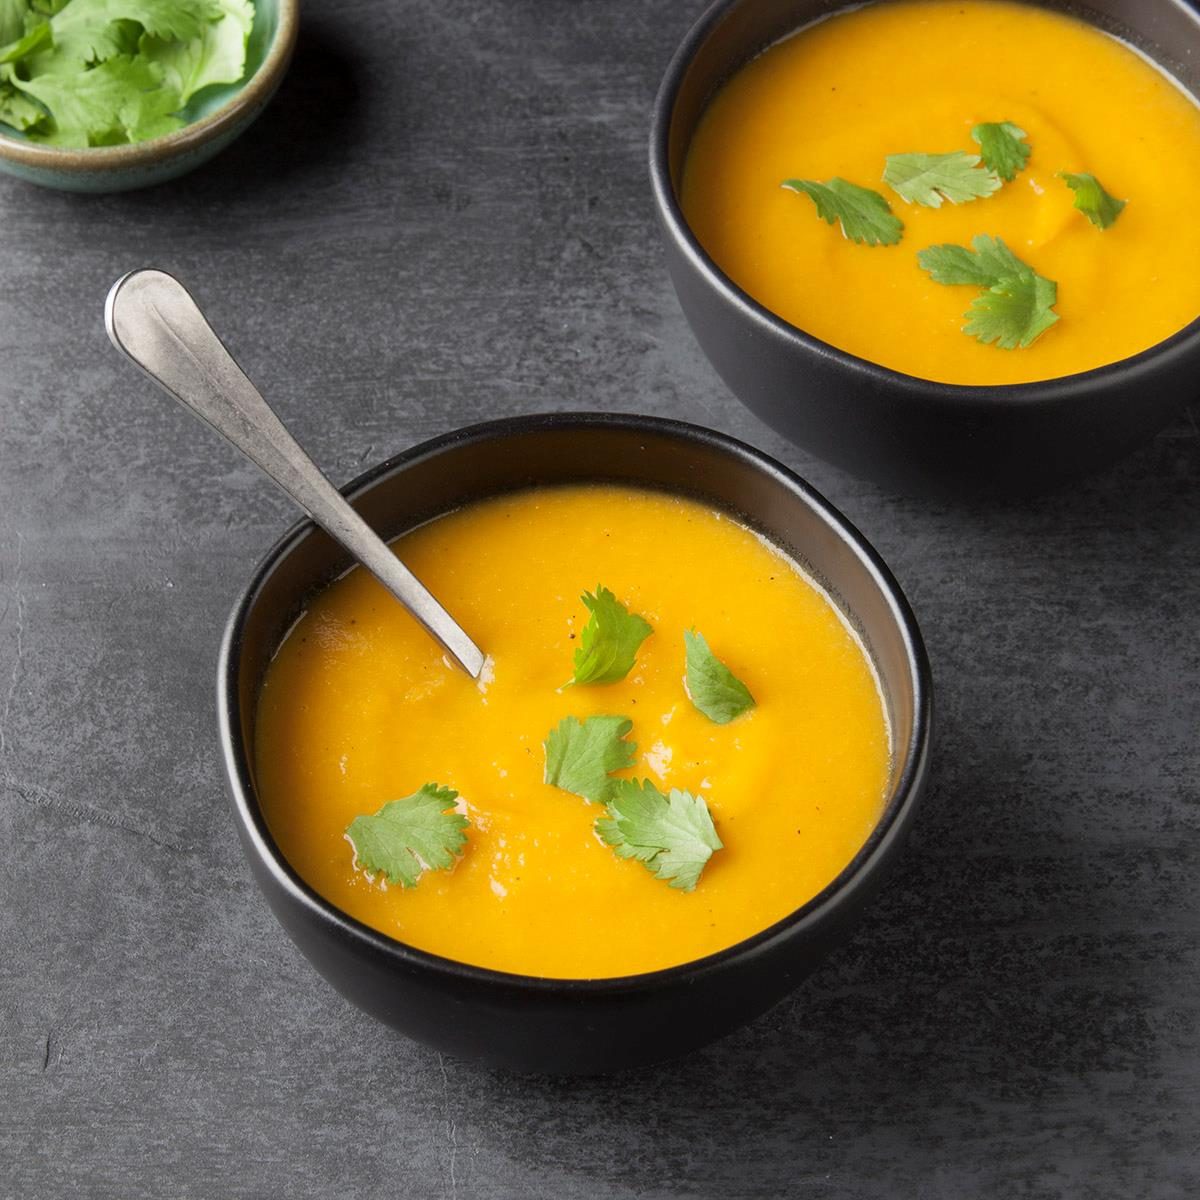 Vegan Carrot Soup Recipe: How to Make It